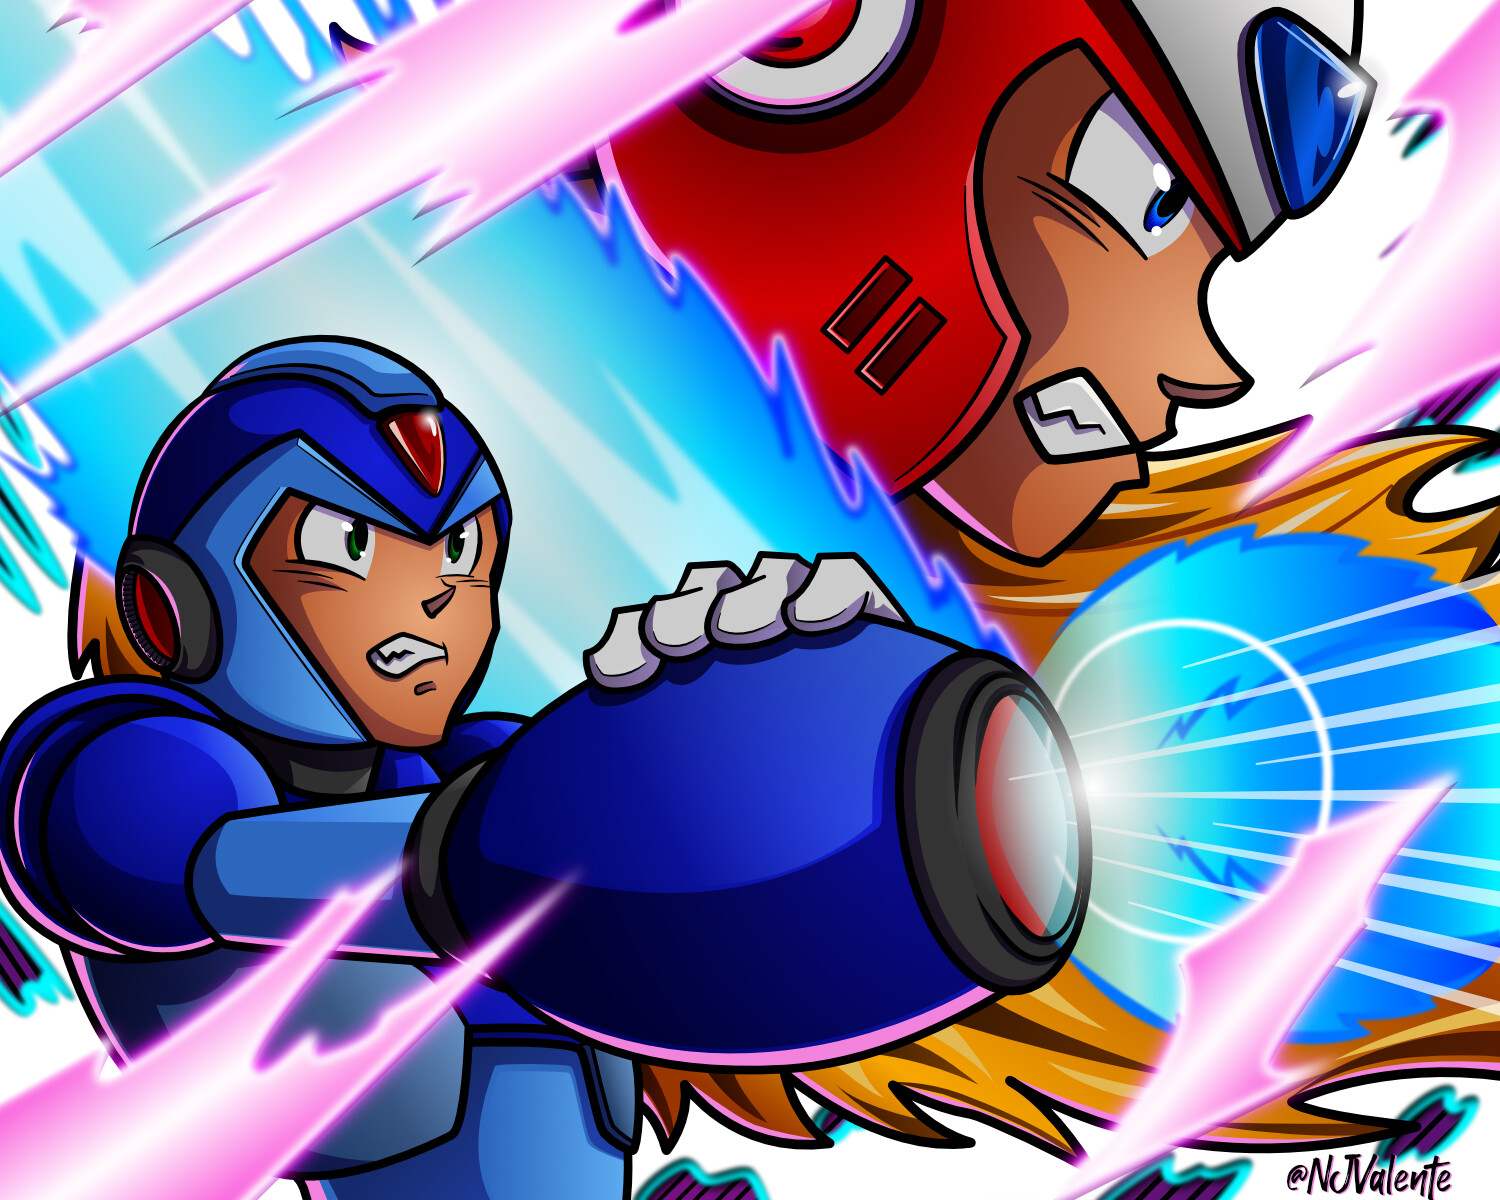 Mega Man X and Zero Vector Art, done in Affinity Designer.